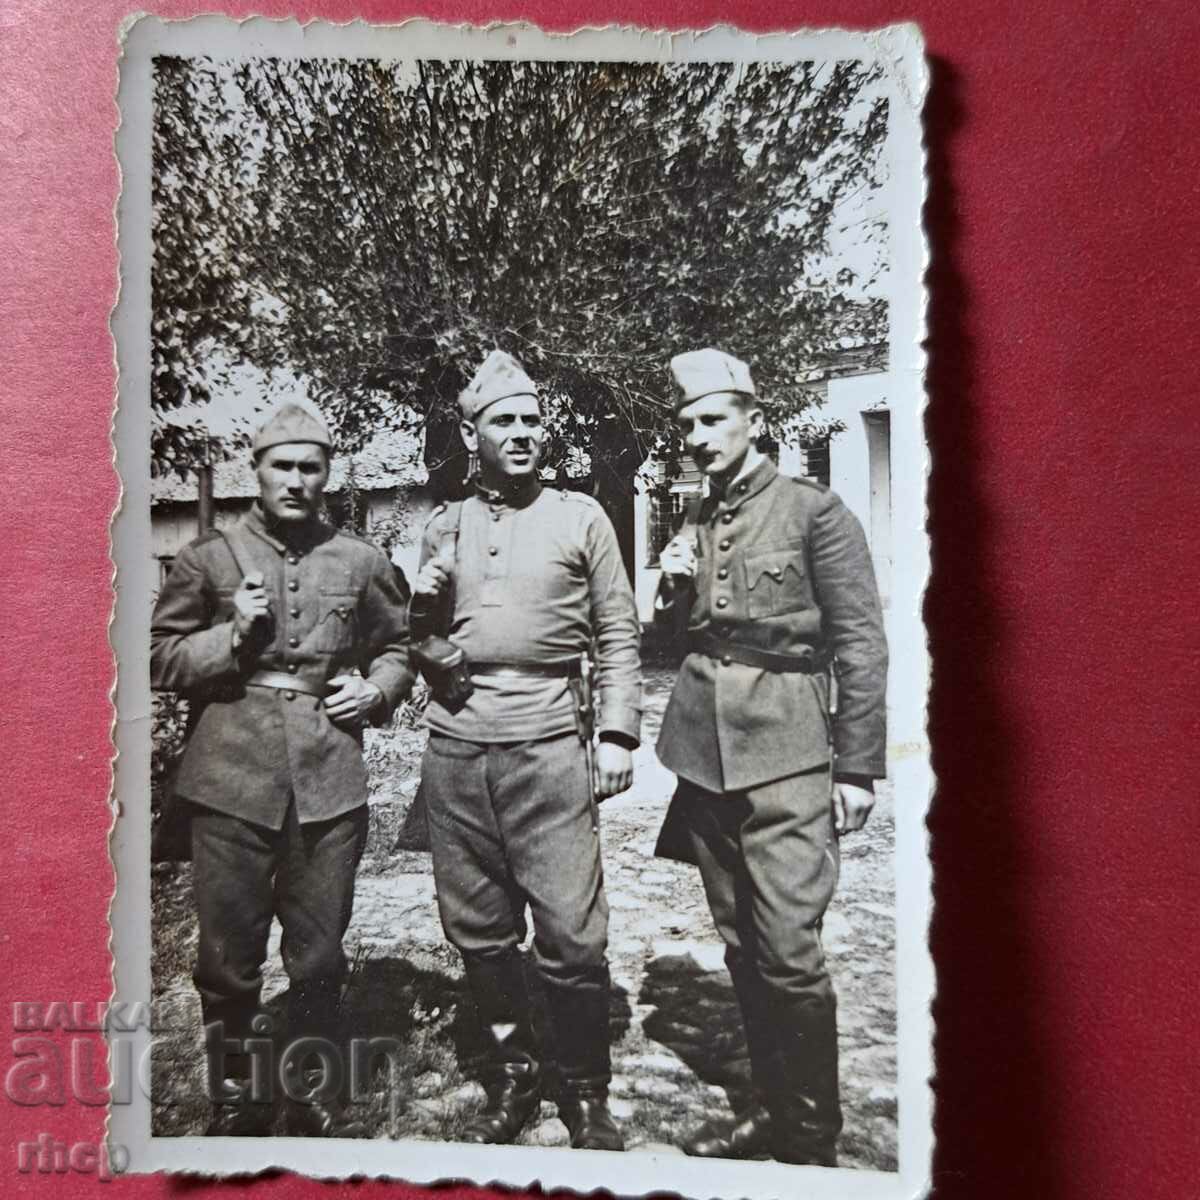 Gyumurjina Bulgarian soldiers September 1941 occupation